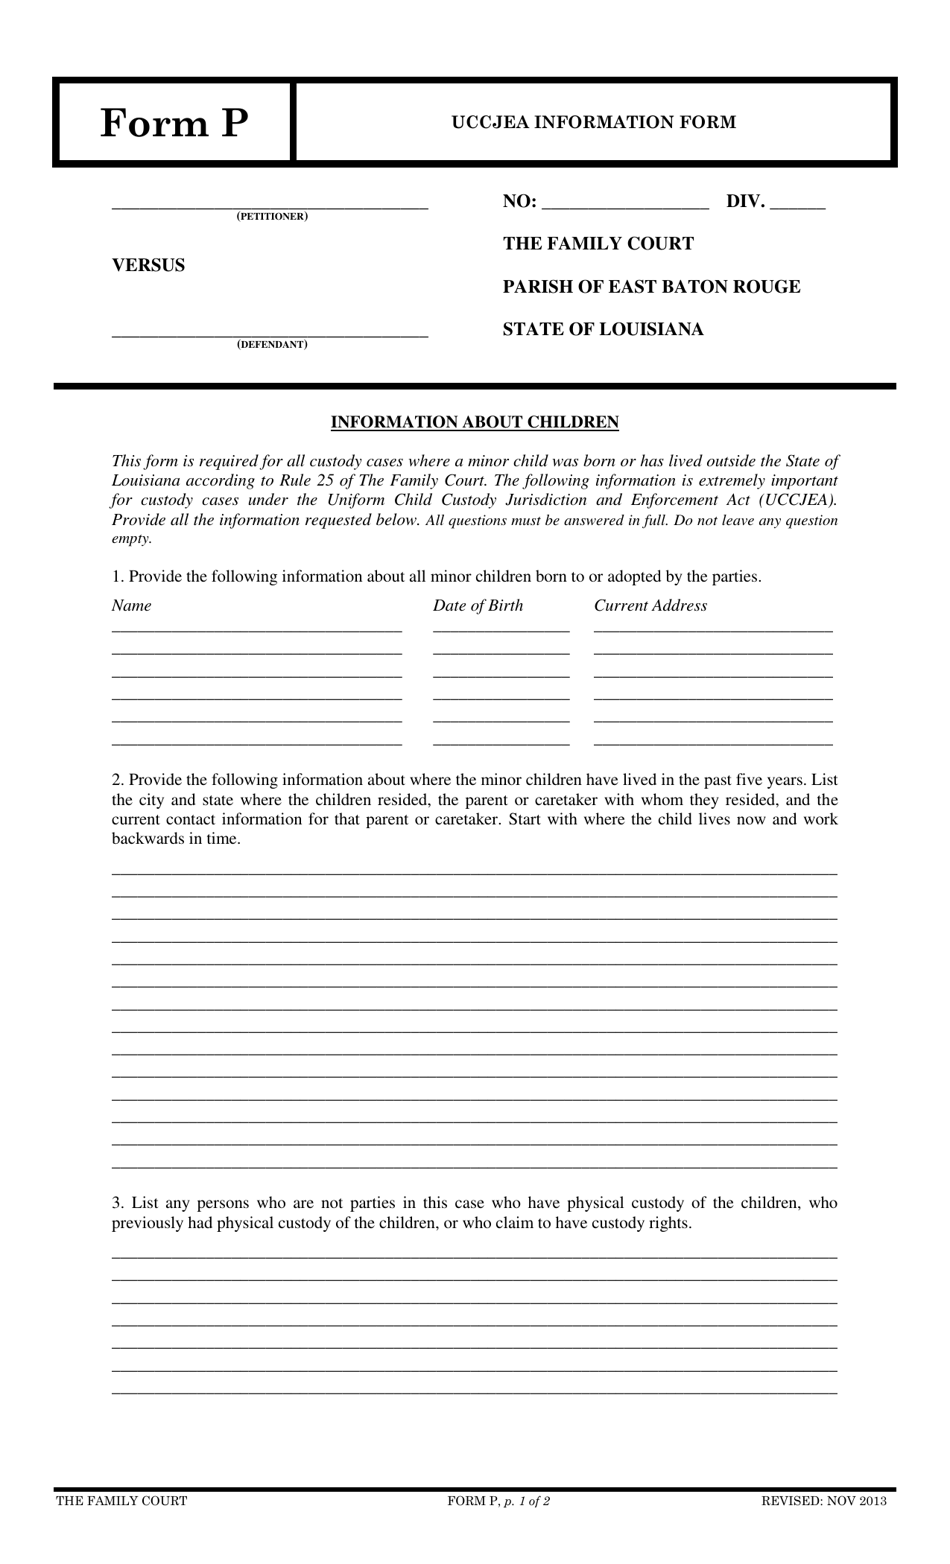 Form P Uccjea Information Form - Louisiana, Page 1